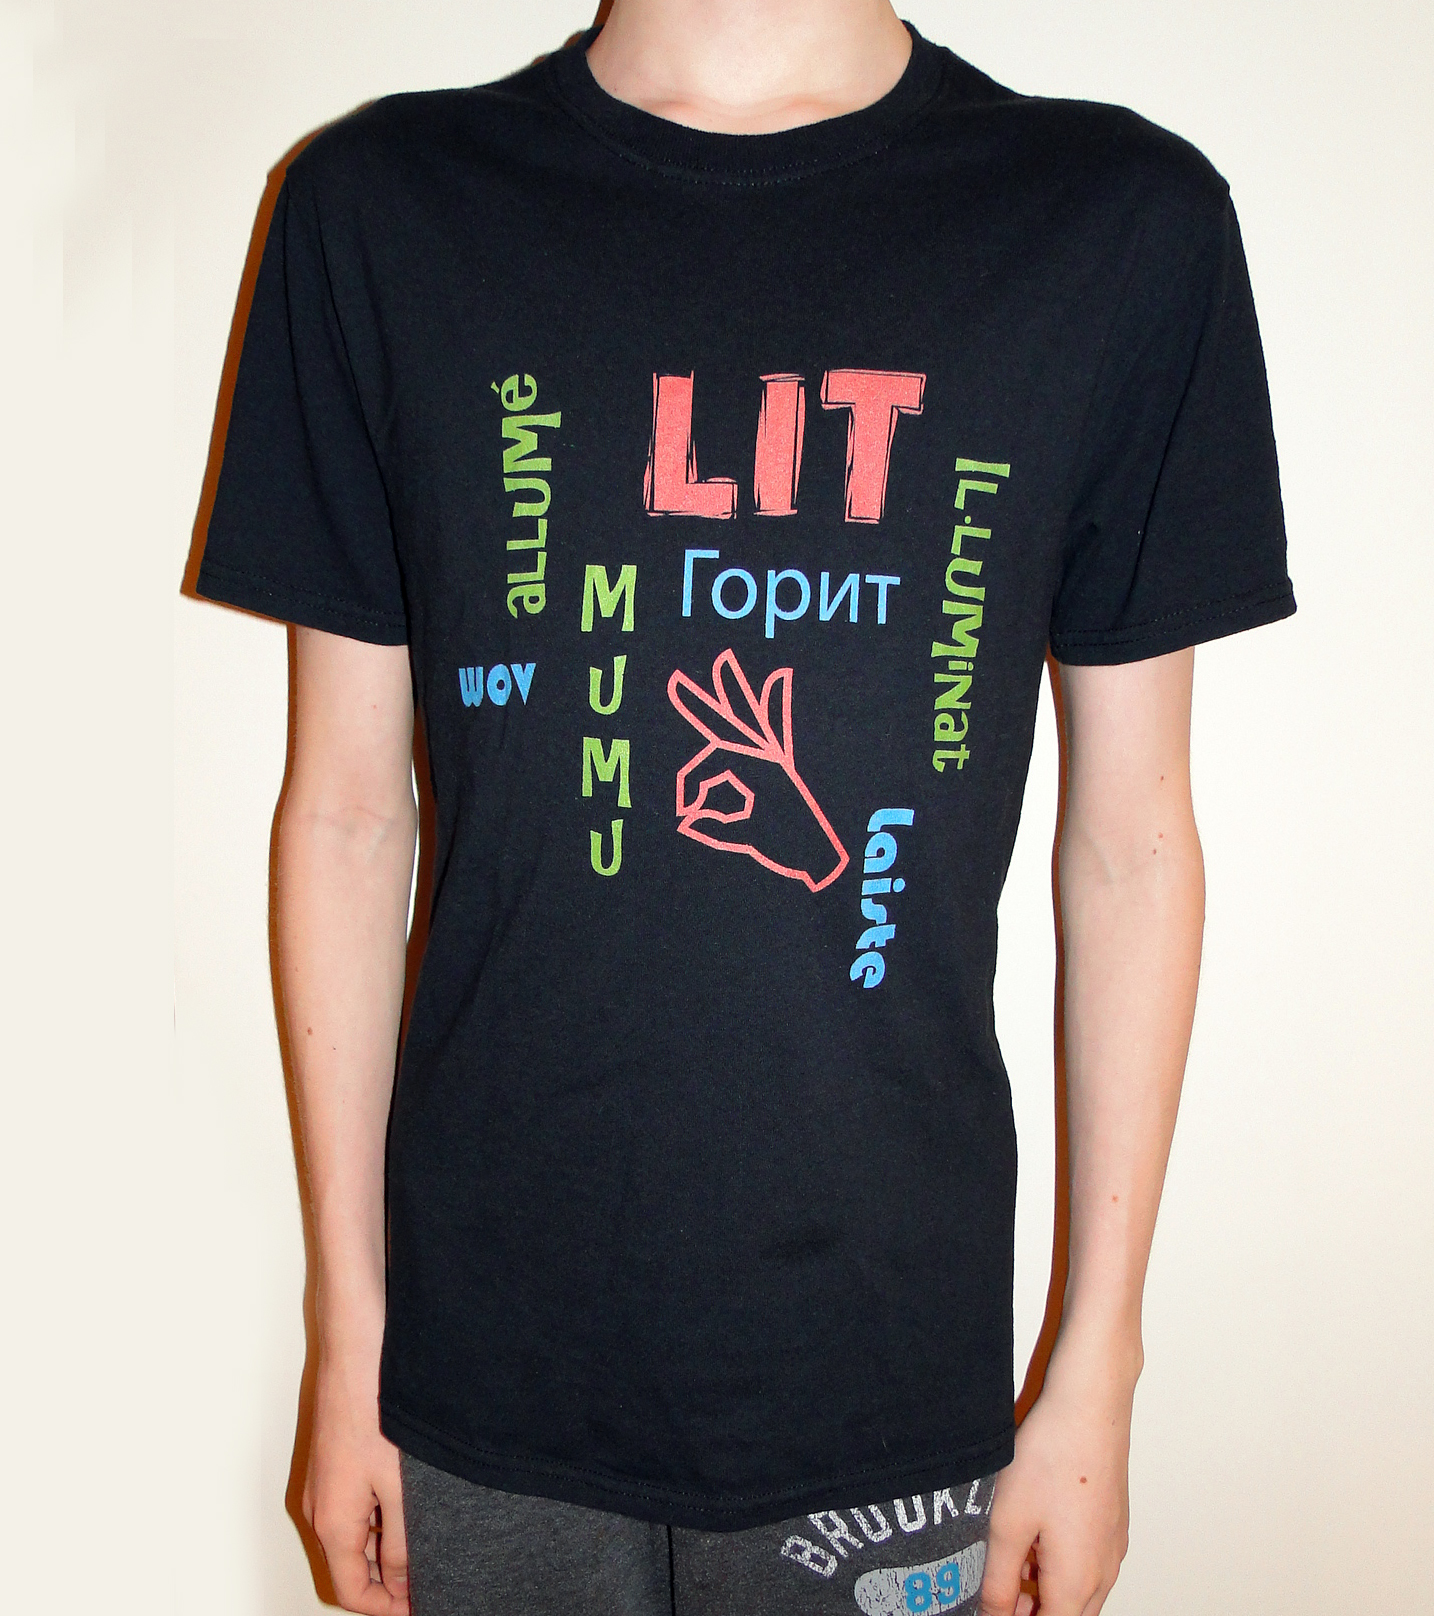 Be "lit" T-shirt